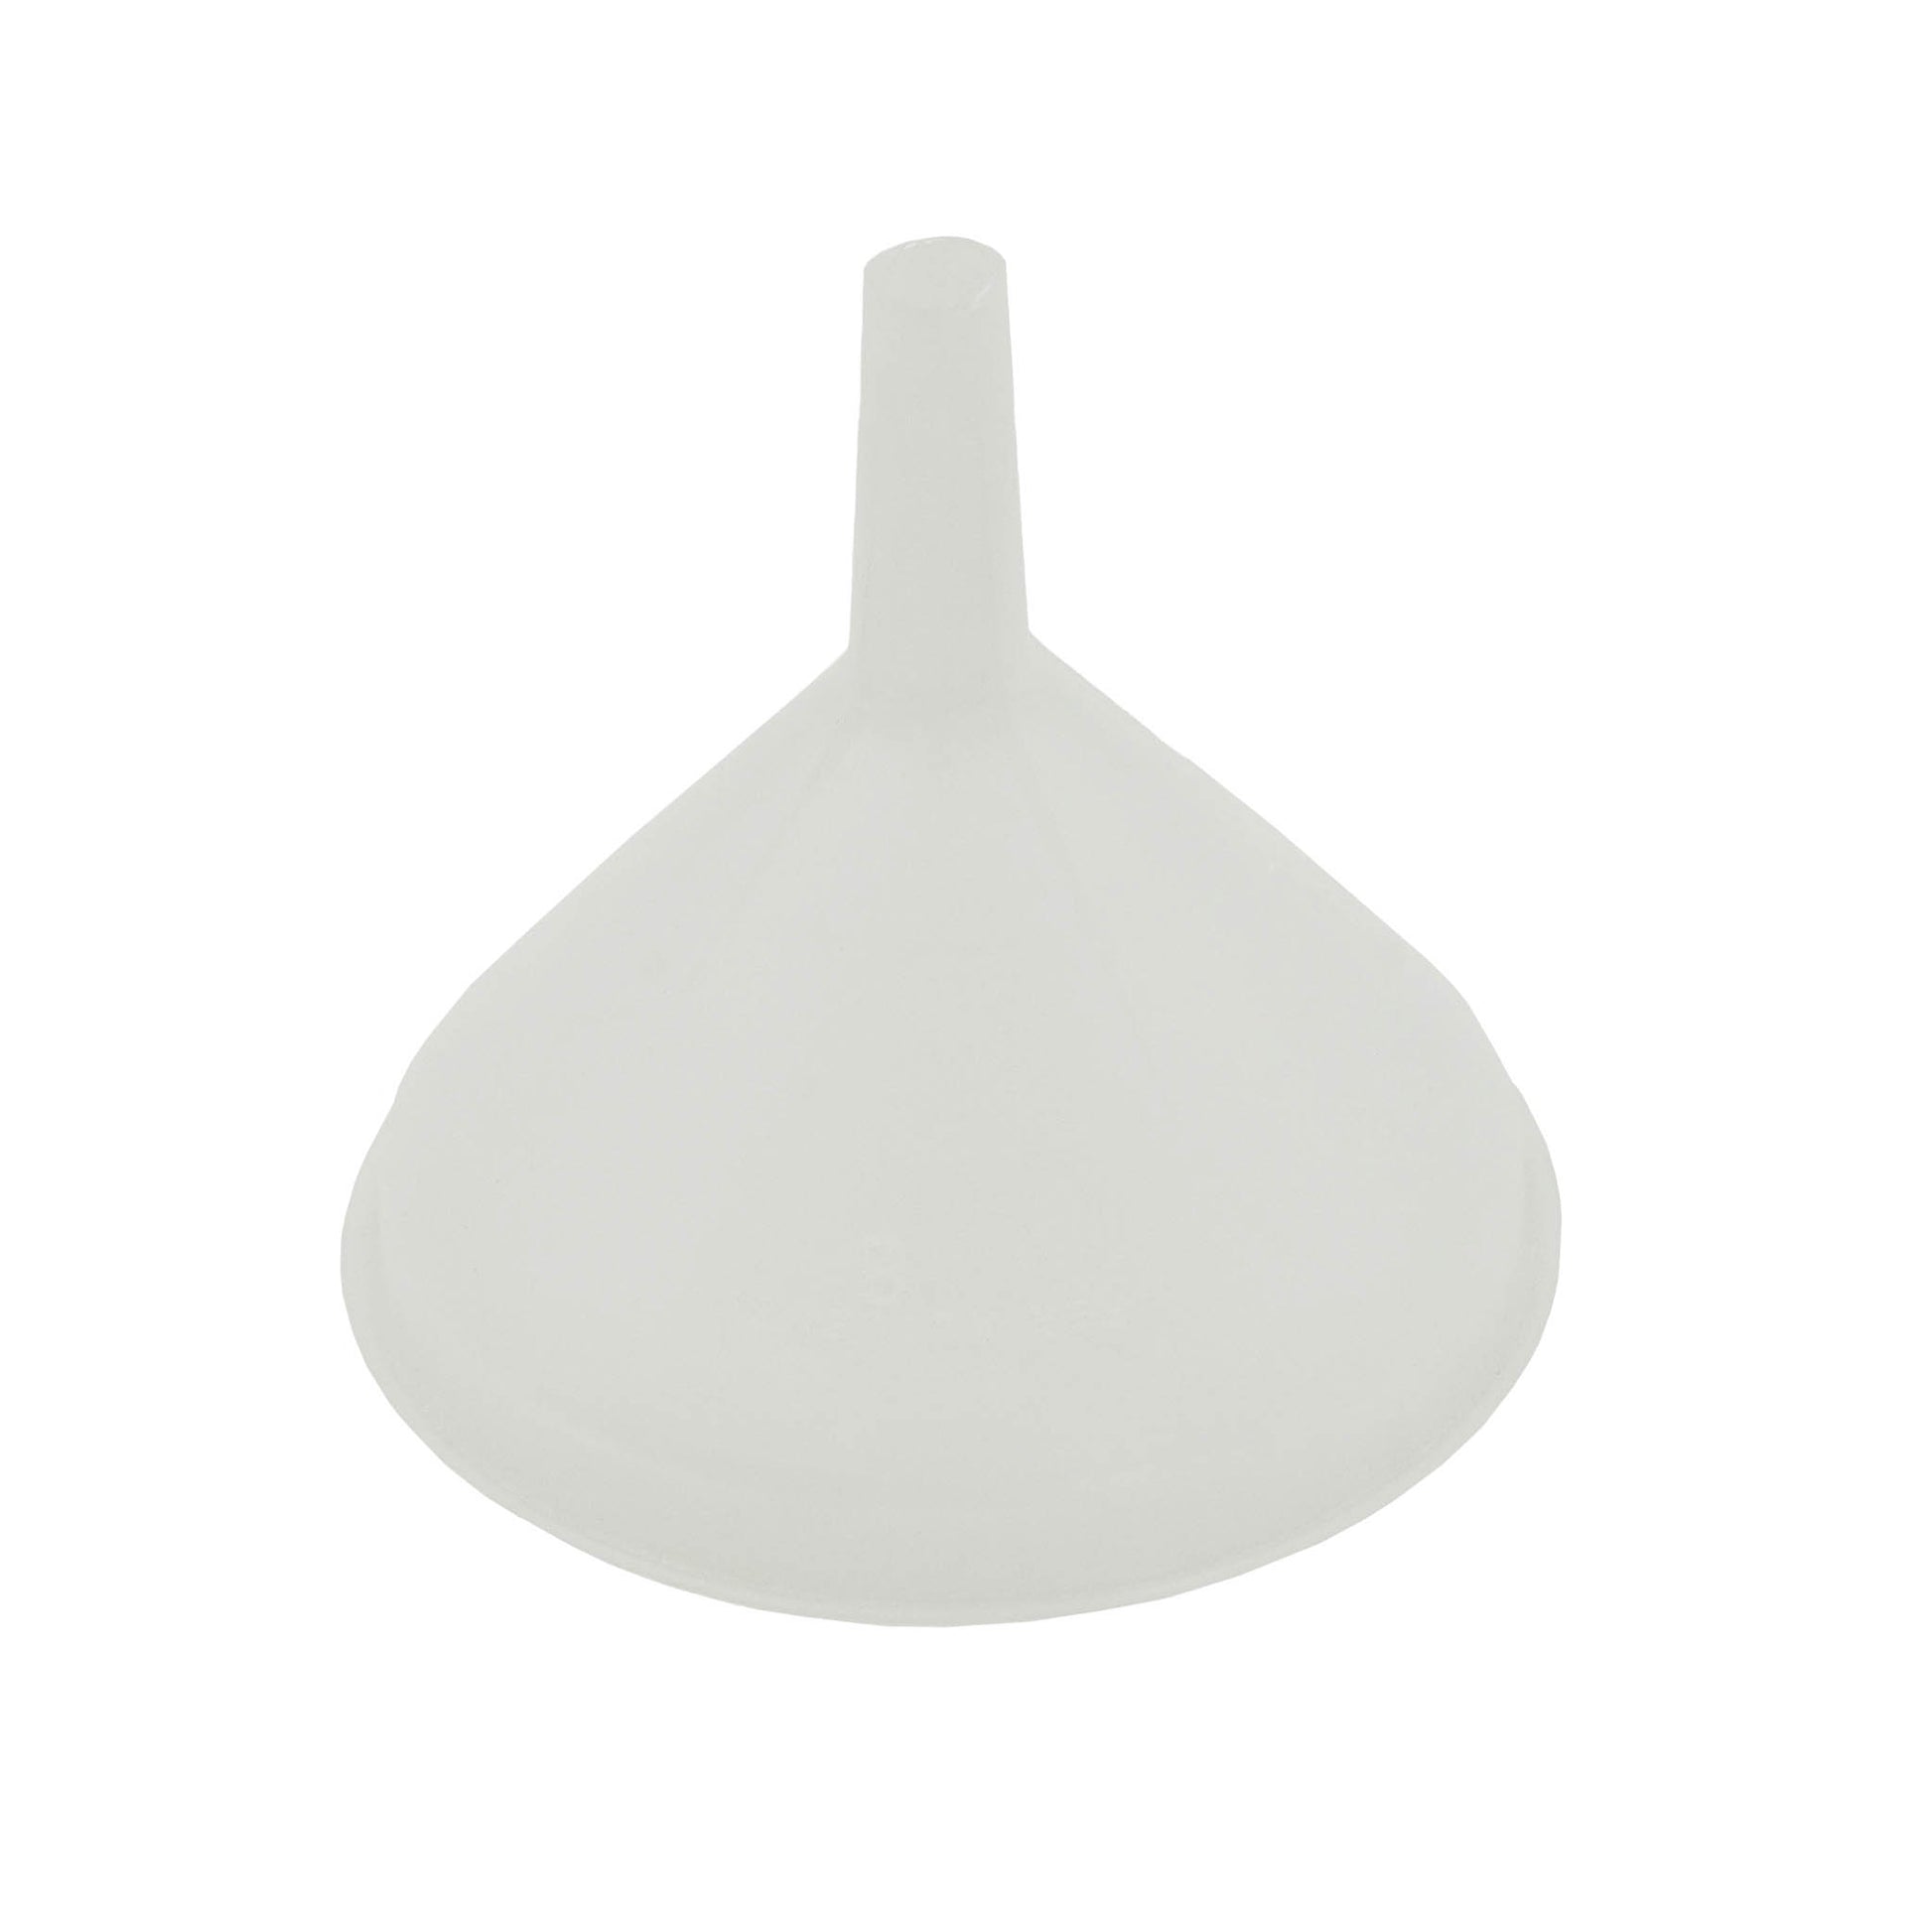 35cm diameter white food grade plastic funnel with filter rest. 